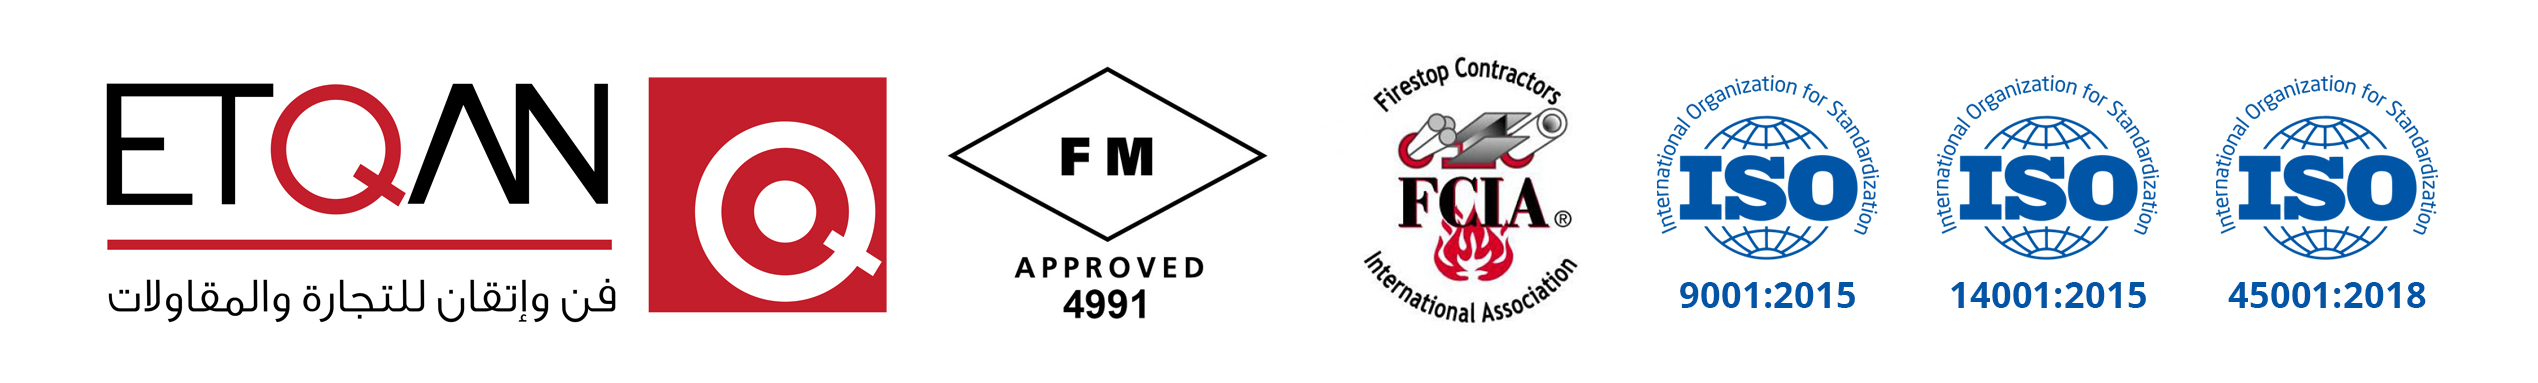 etqan-fann-logo and iso